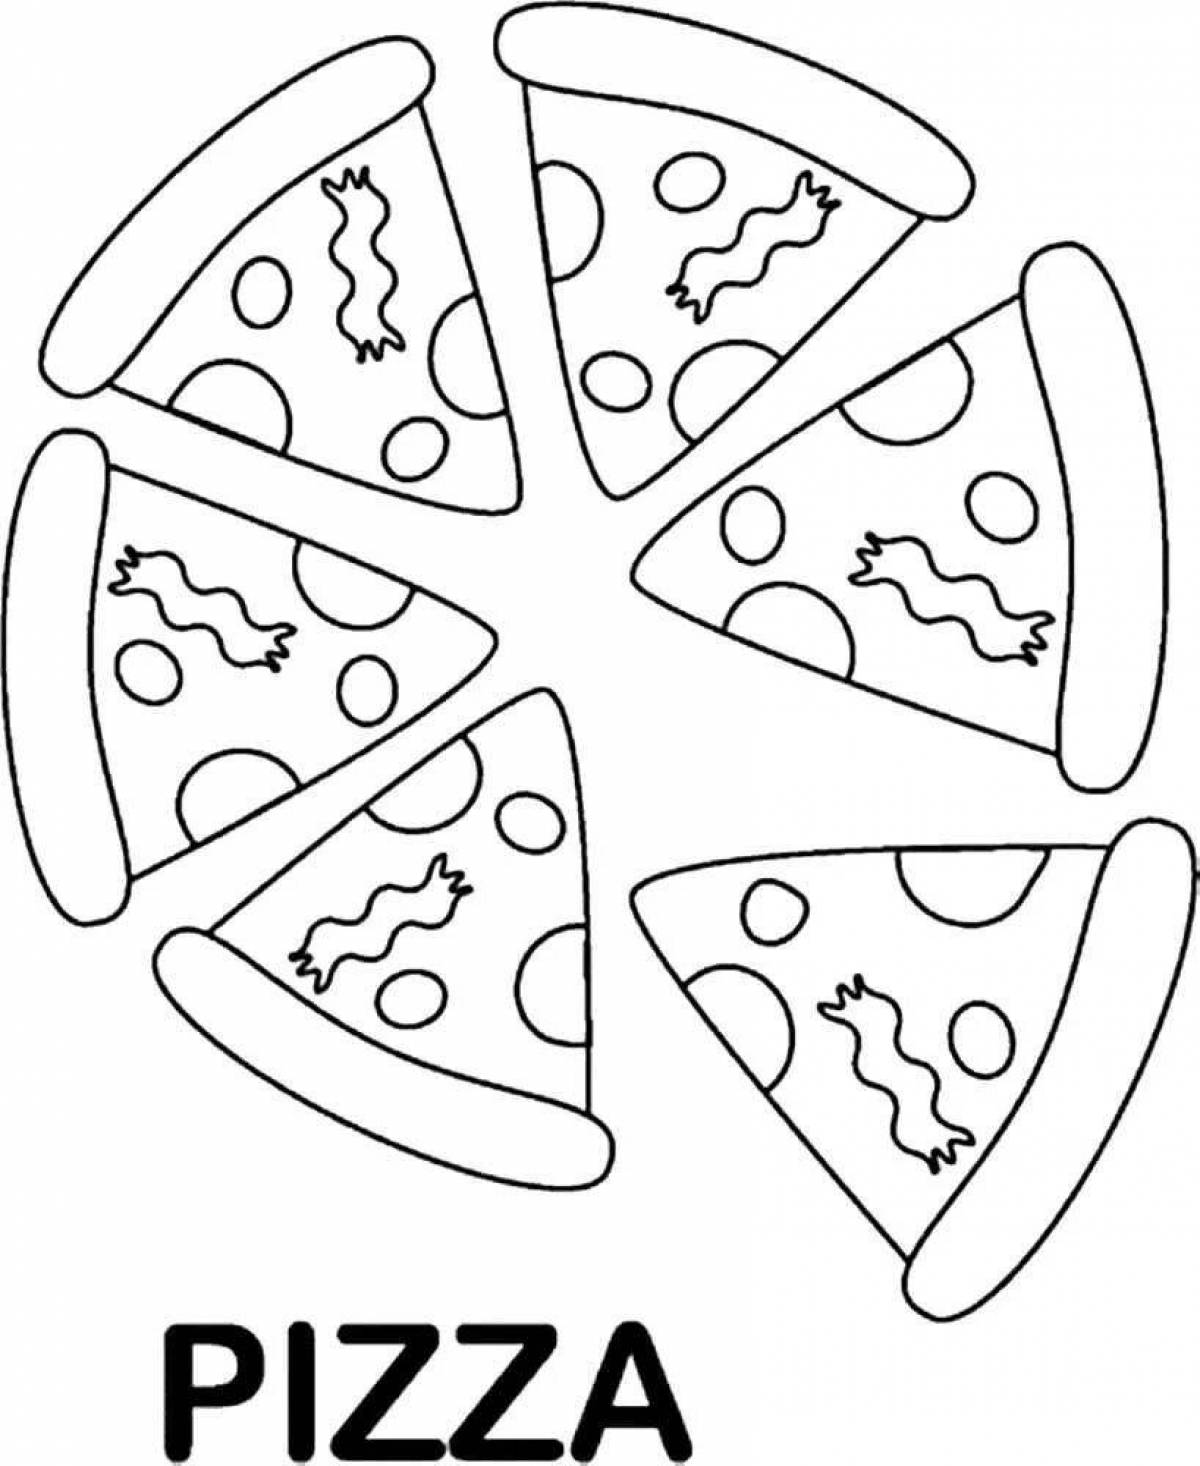 Delicious pizzeria coloring page